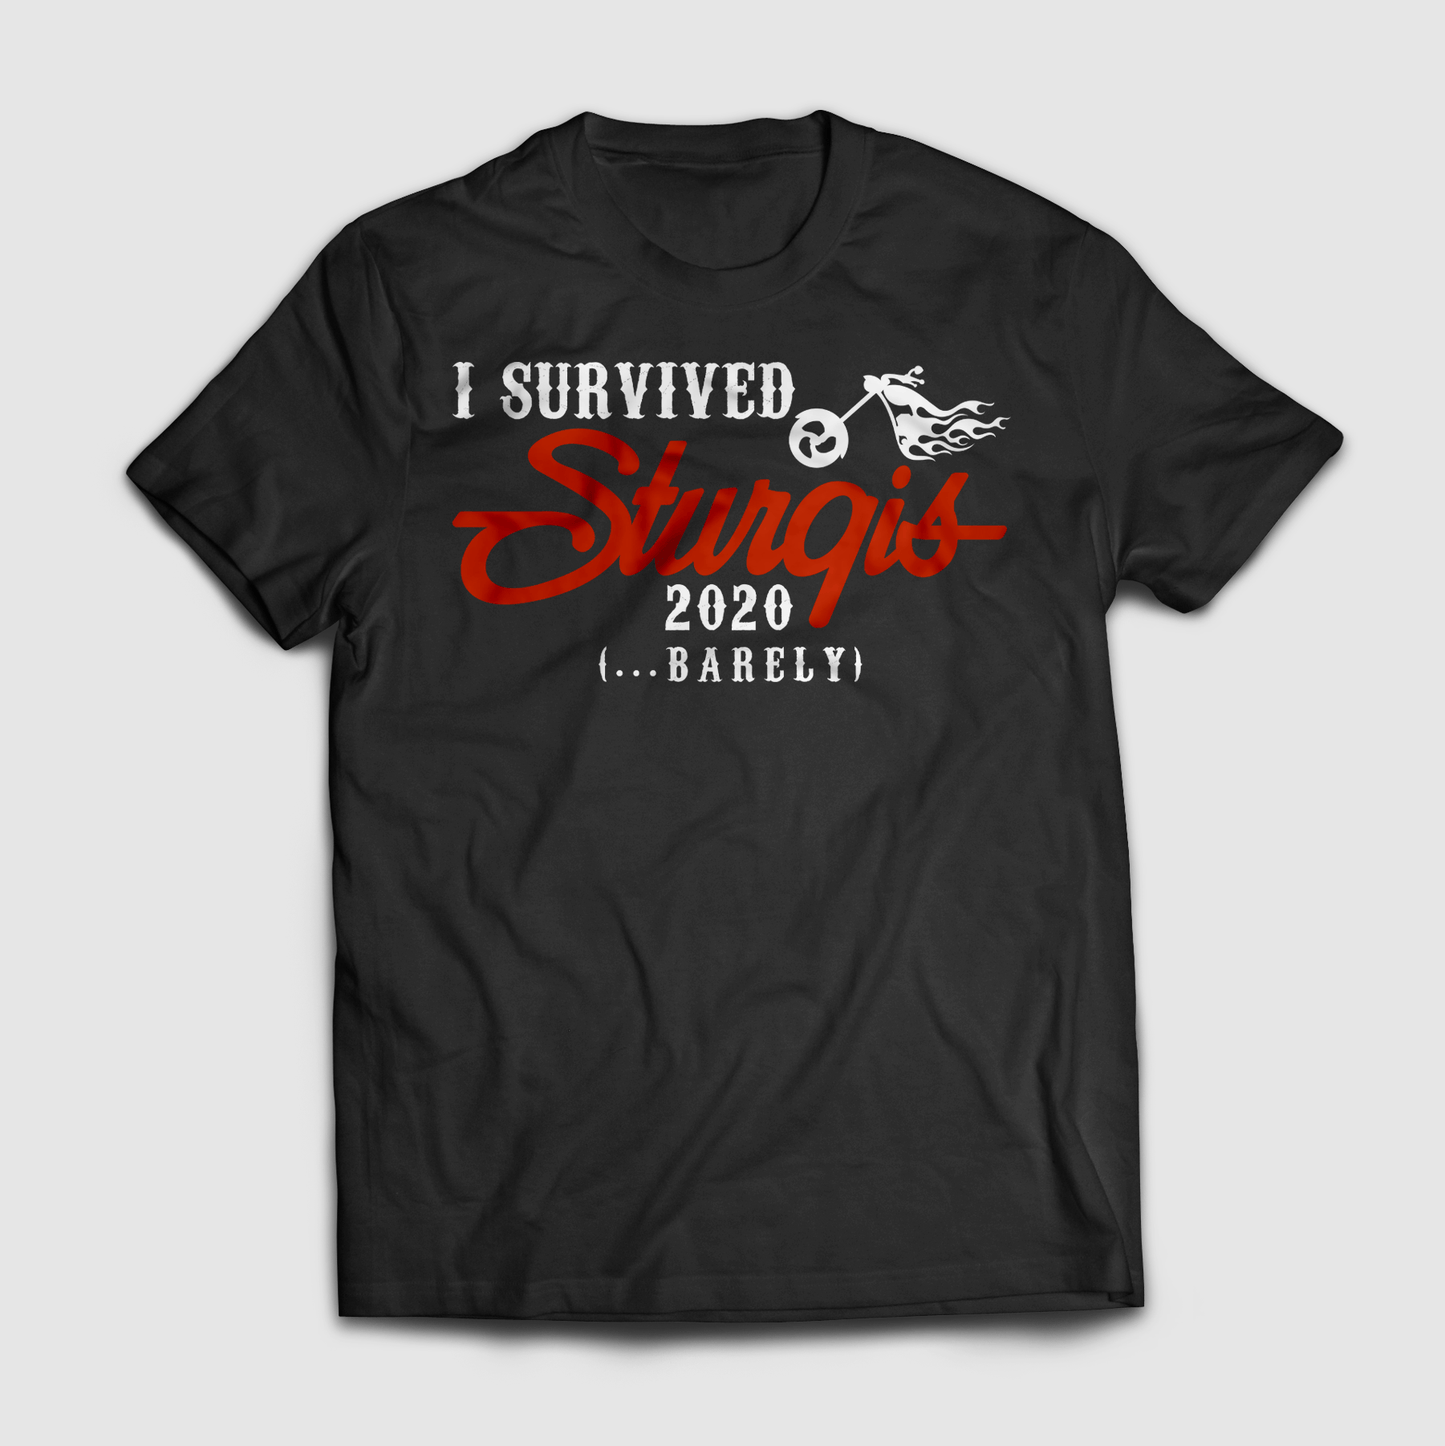 I Survived Sturgis 2020 Shirt